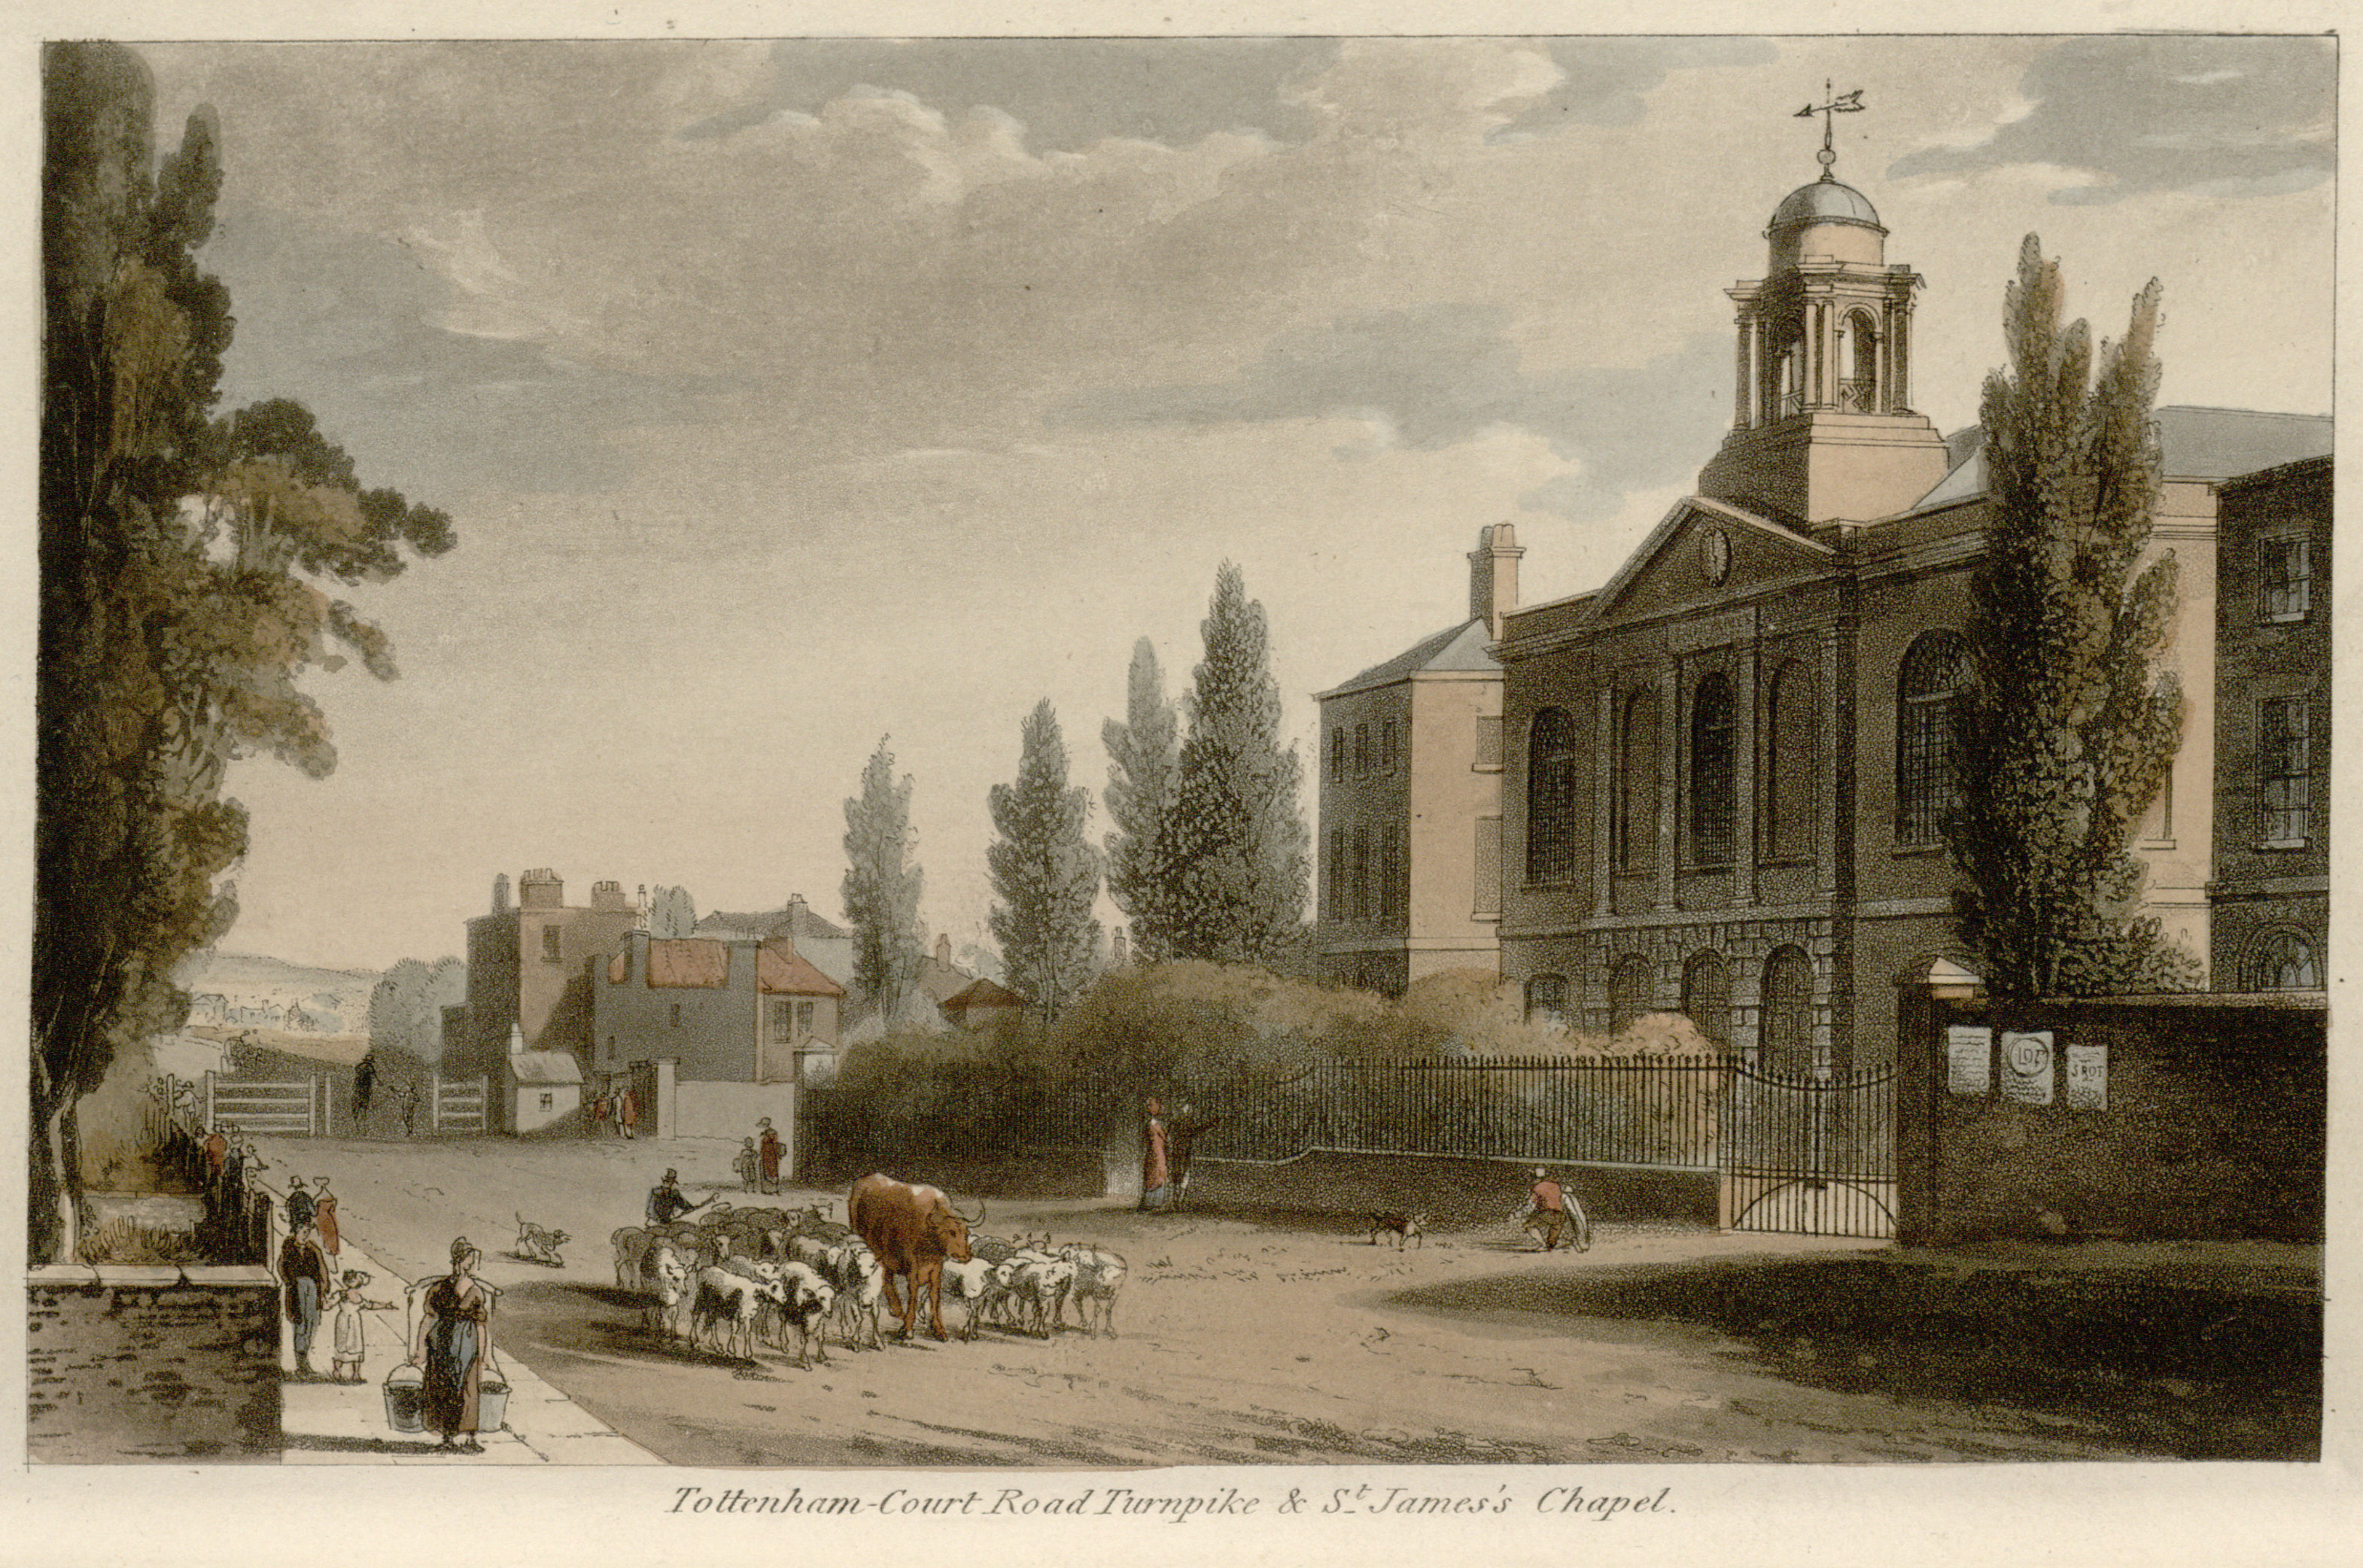 49 - Papworth - Tottenham Court Road Turnpike & St James's Chapel